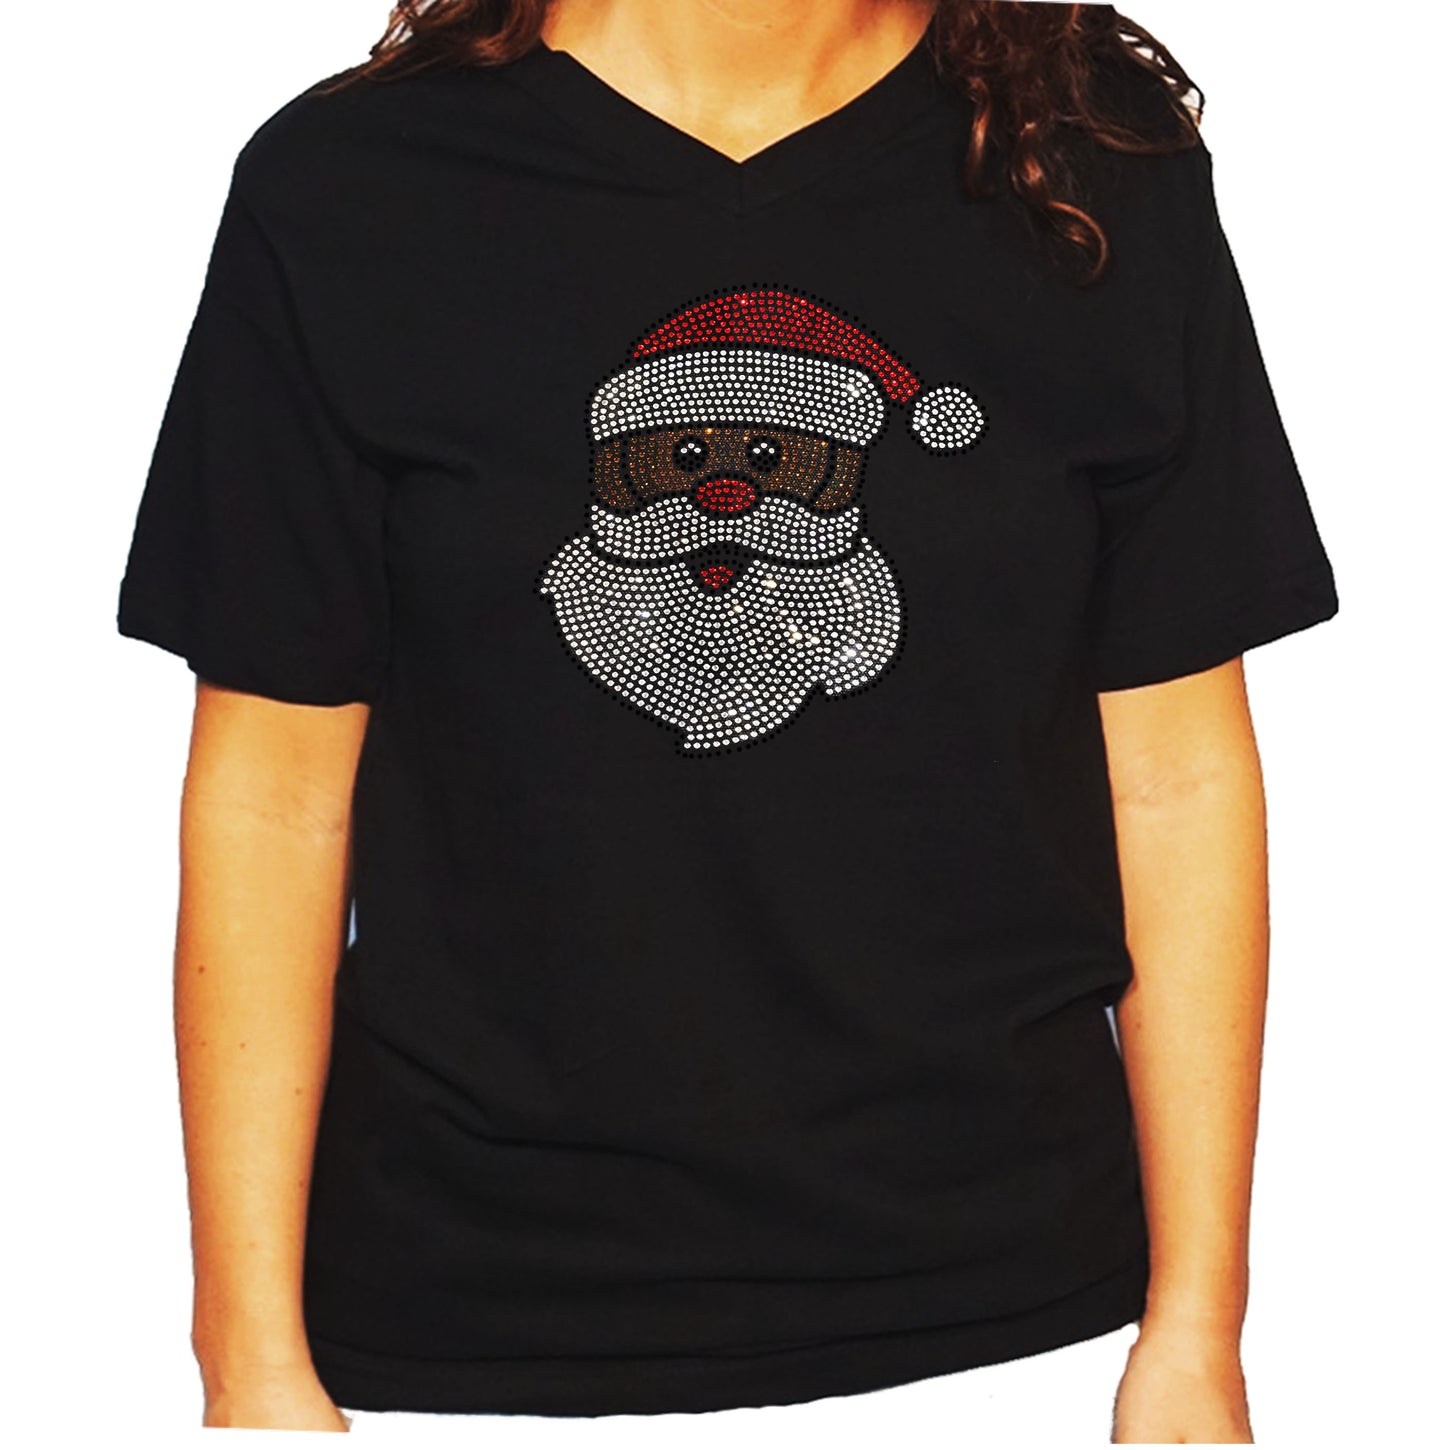 Women's / Unisex T-Shirt with African American Santa Claus in Rhinestones